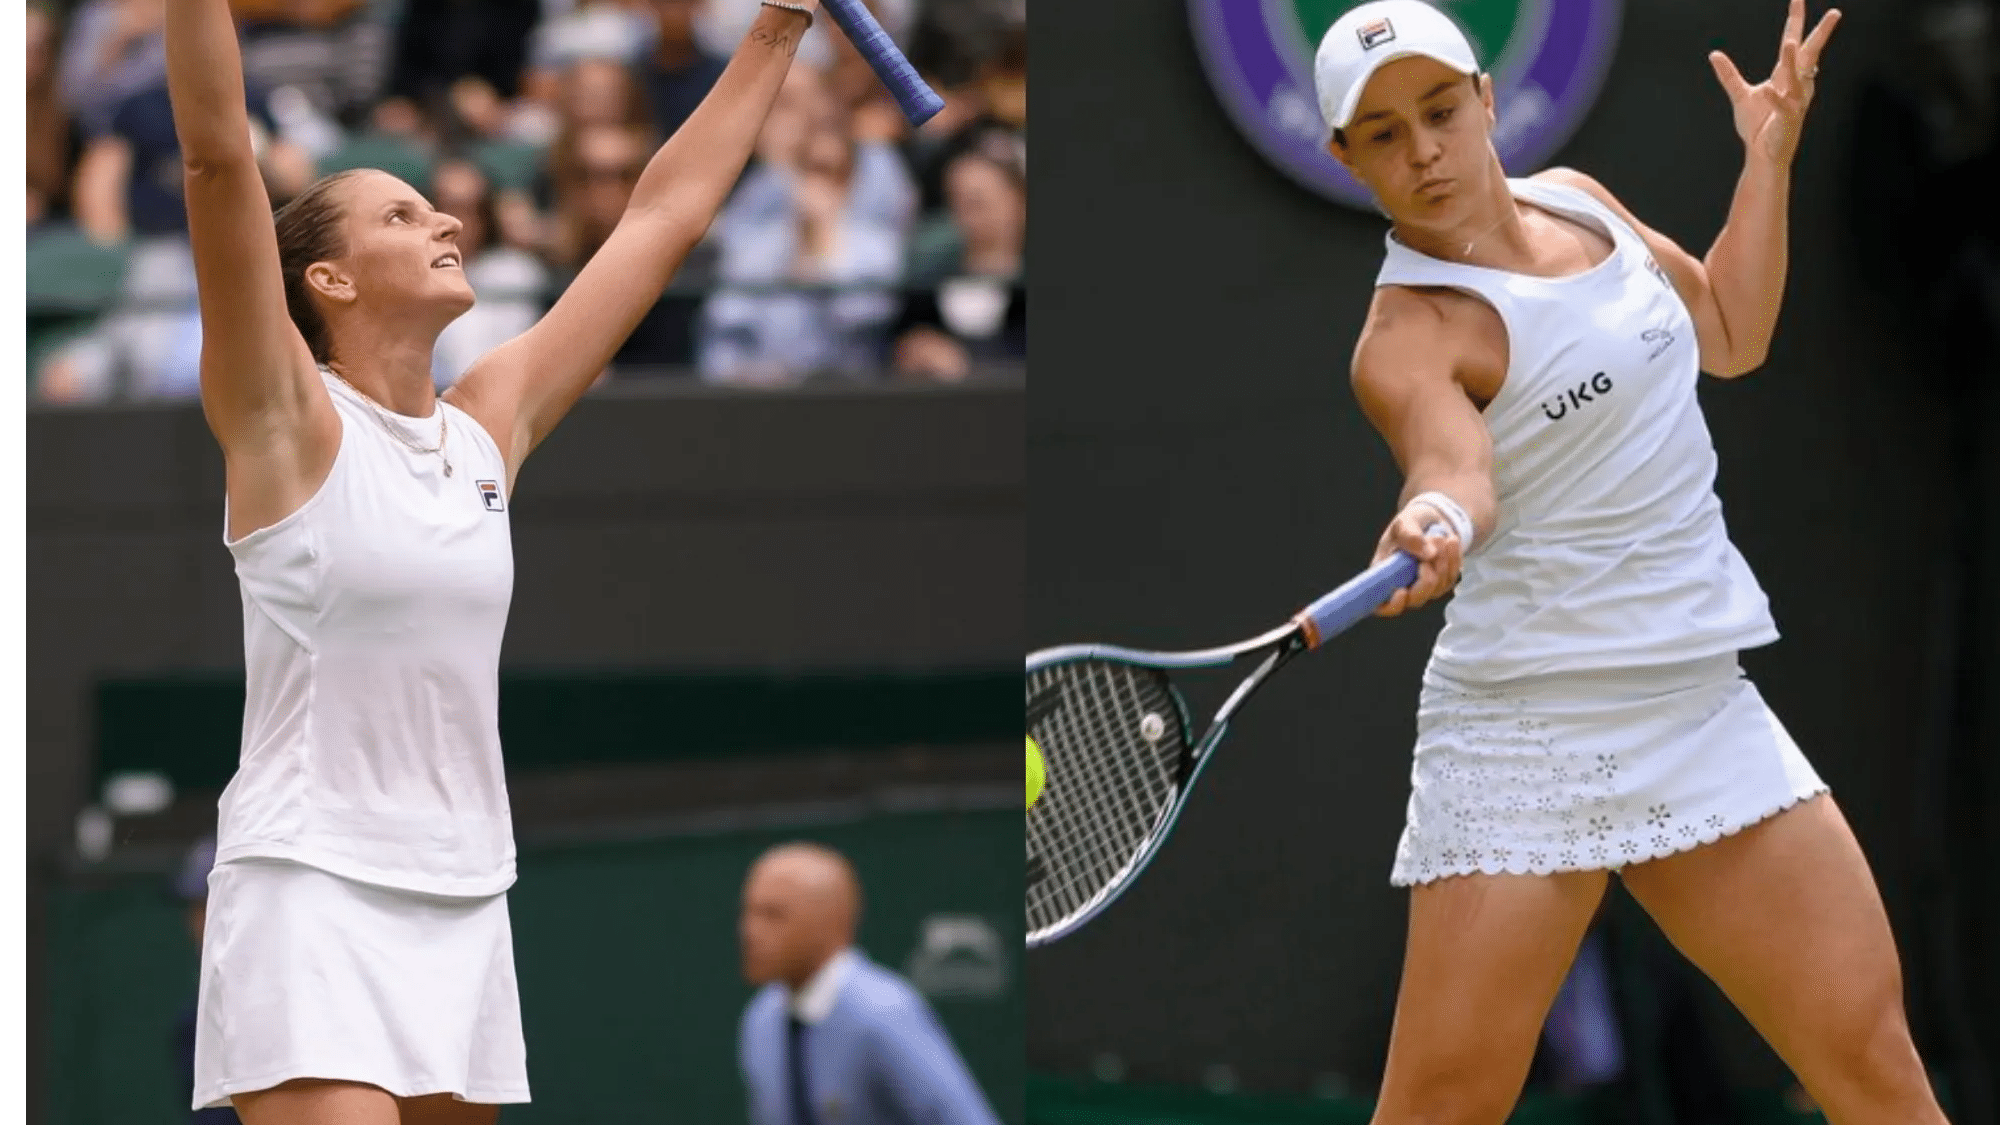 Ashleigh Barty and Karolina Pliskova’s path to the Wimbledon final